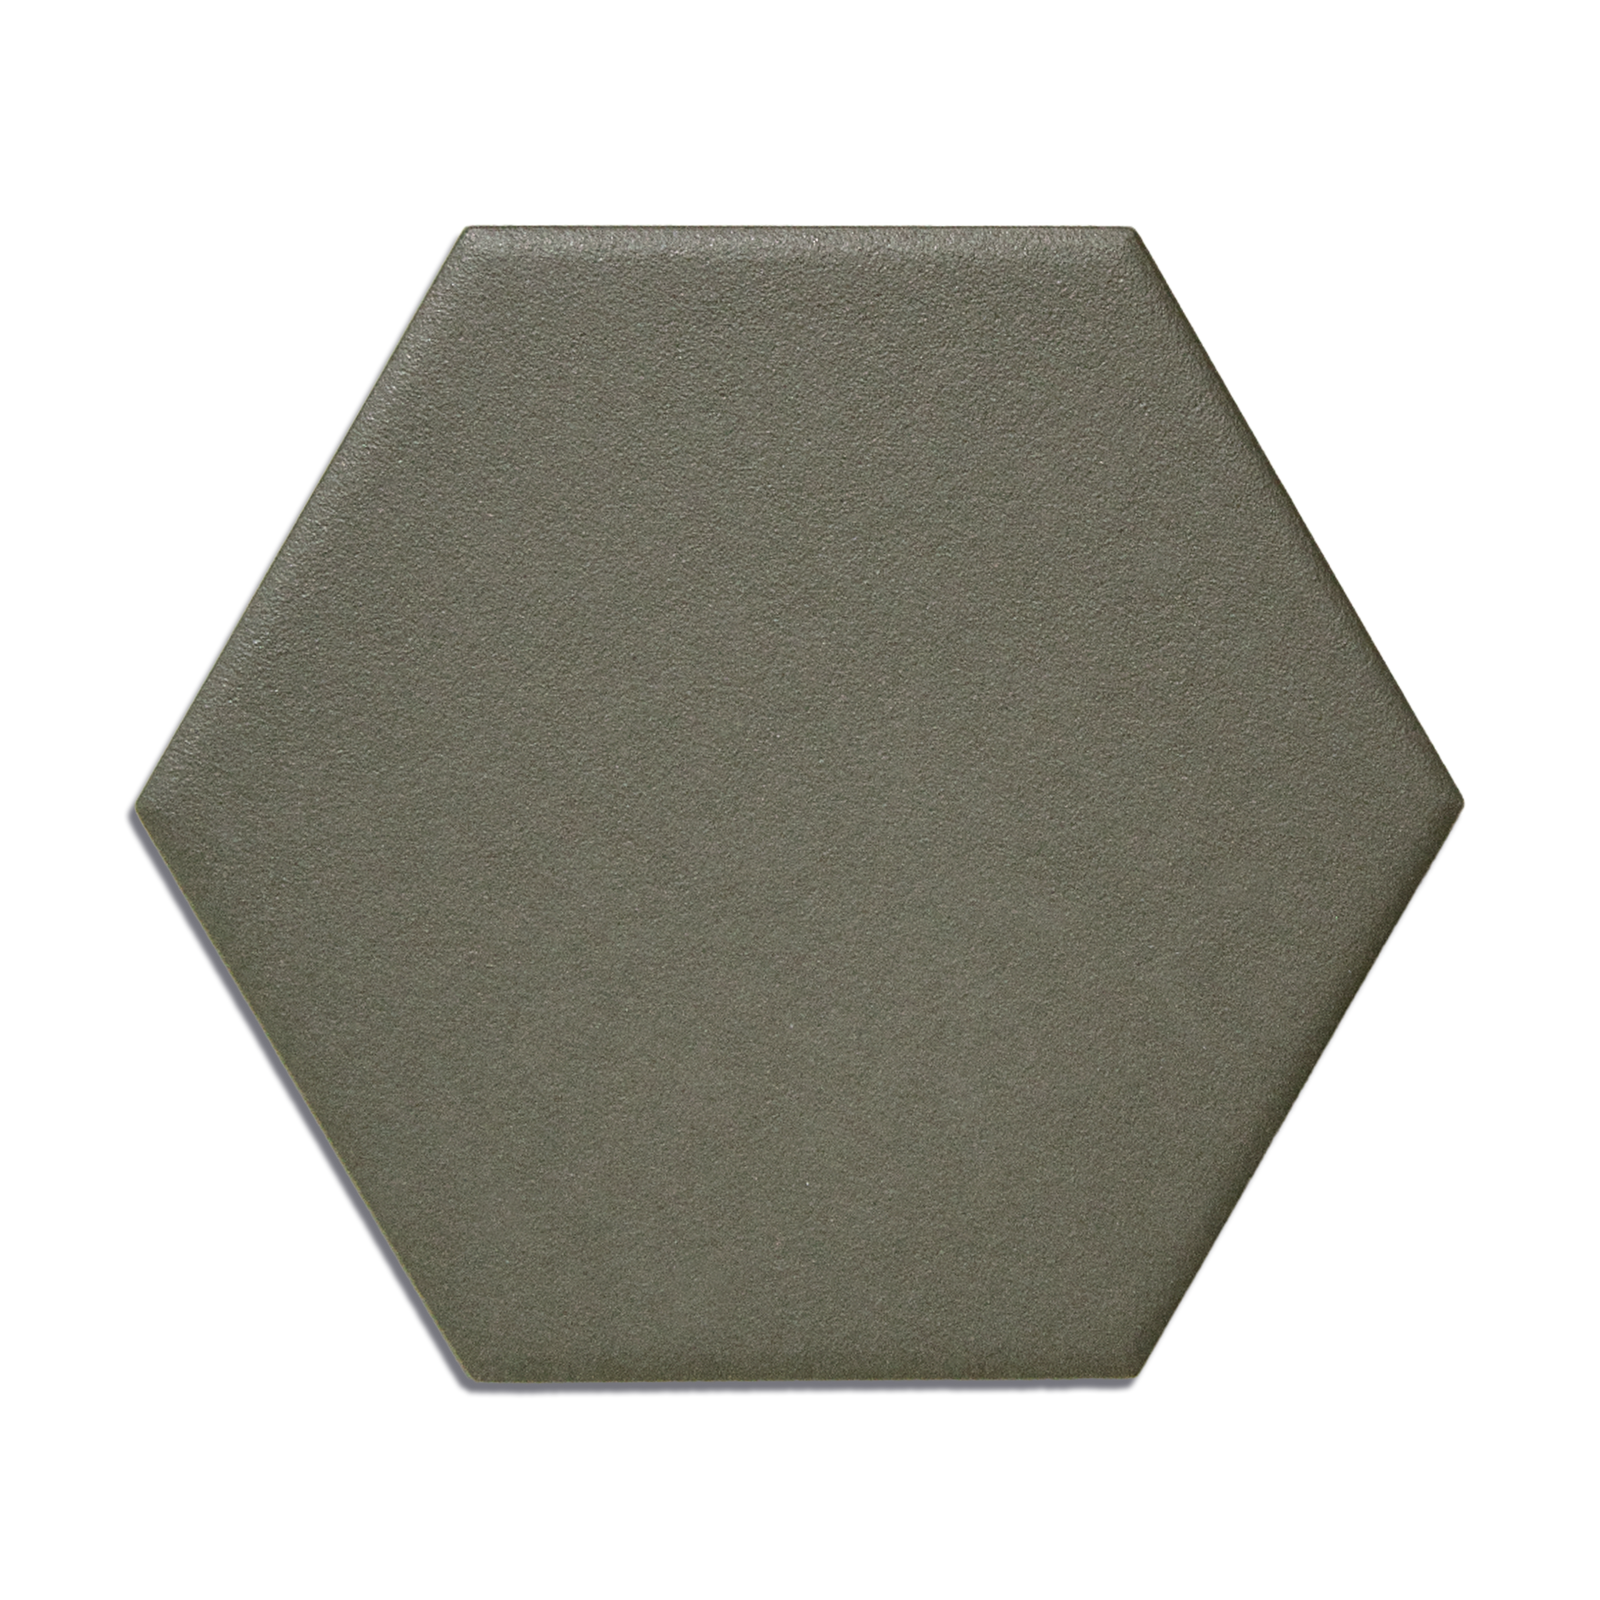 Trucco Hexagon Crocodile Green 4.25x5 Full Body Porcelain Tile